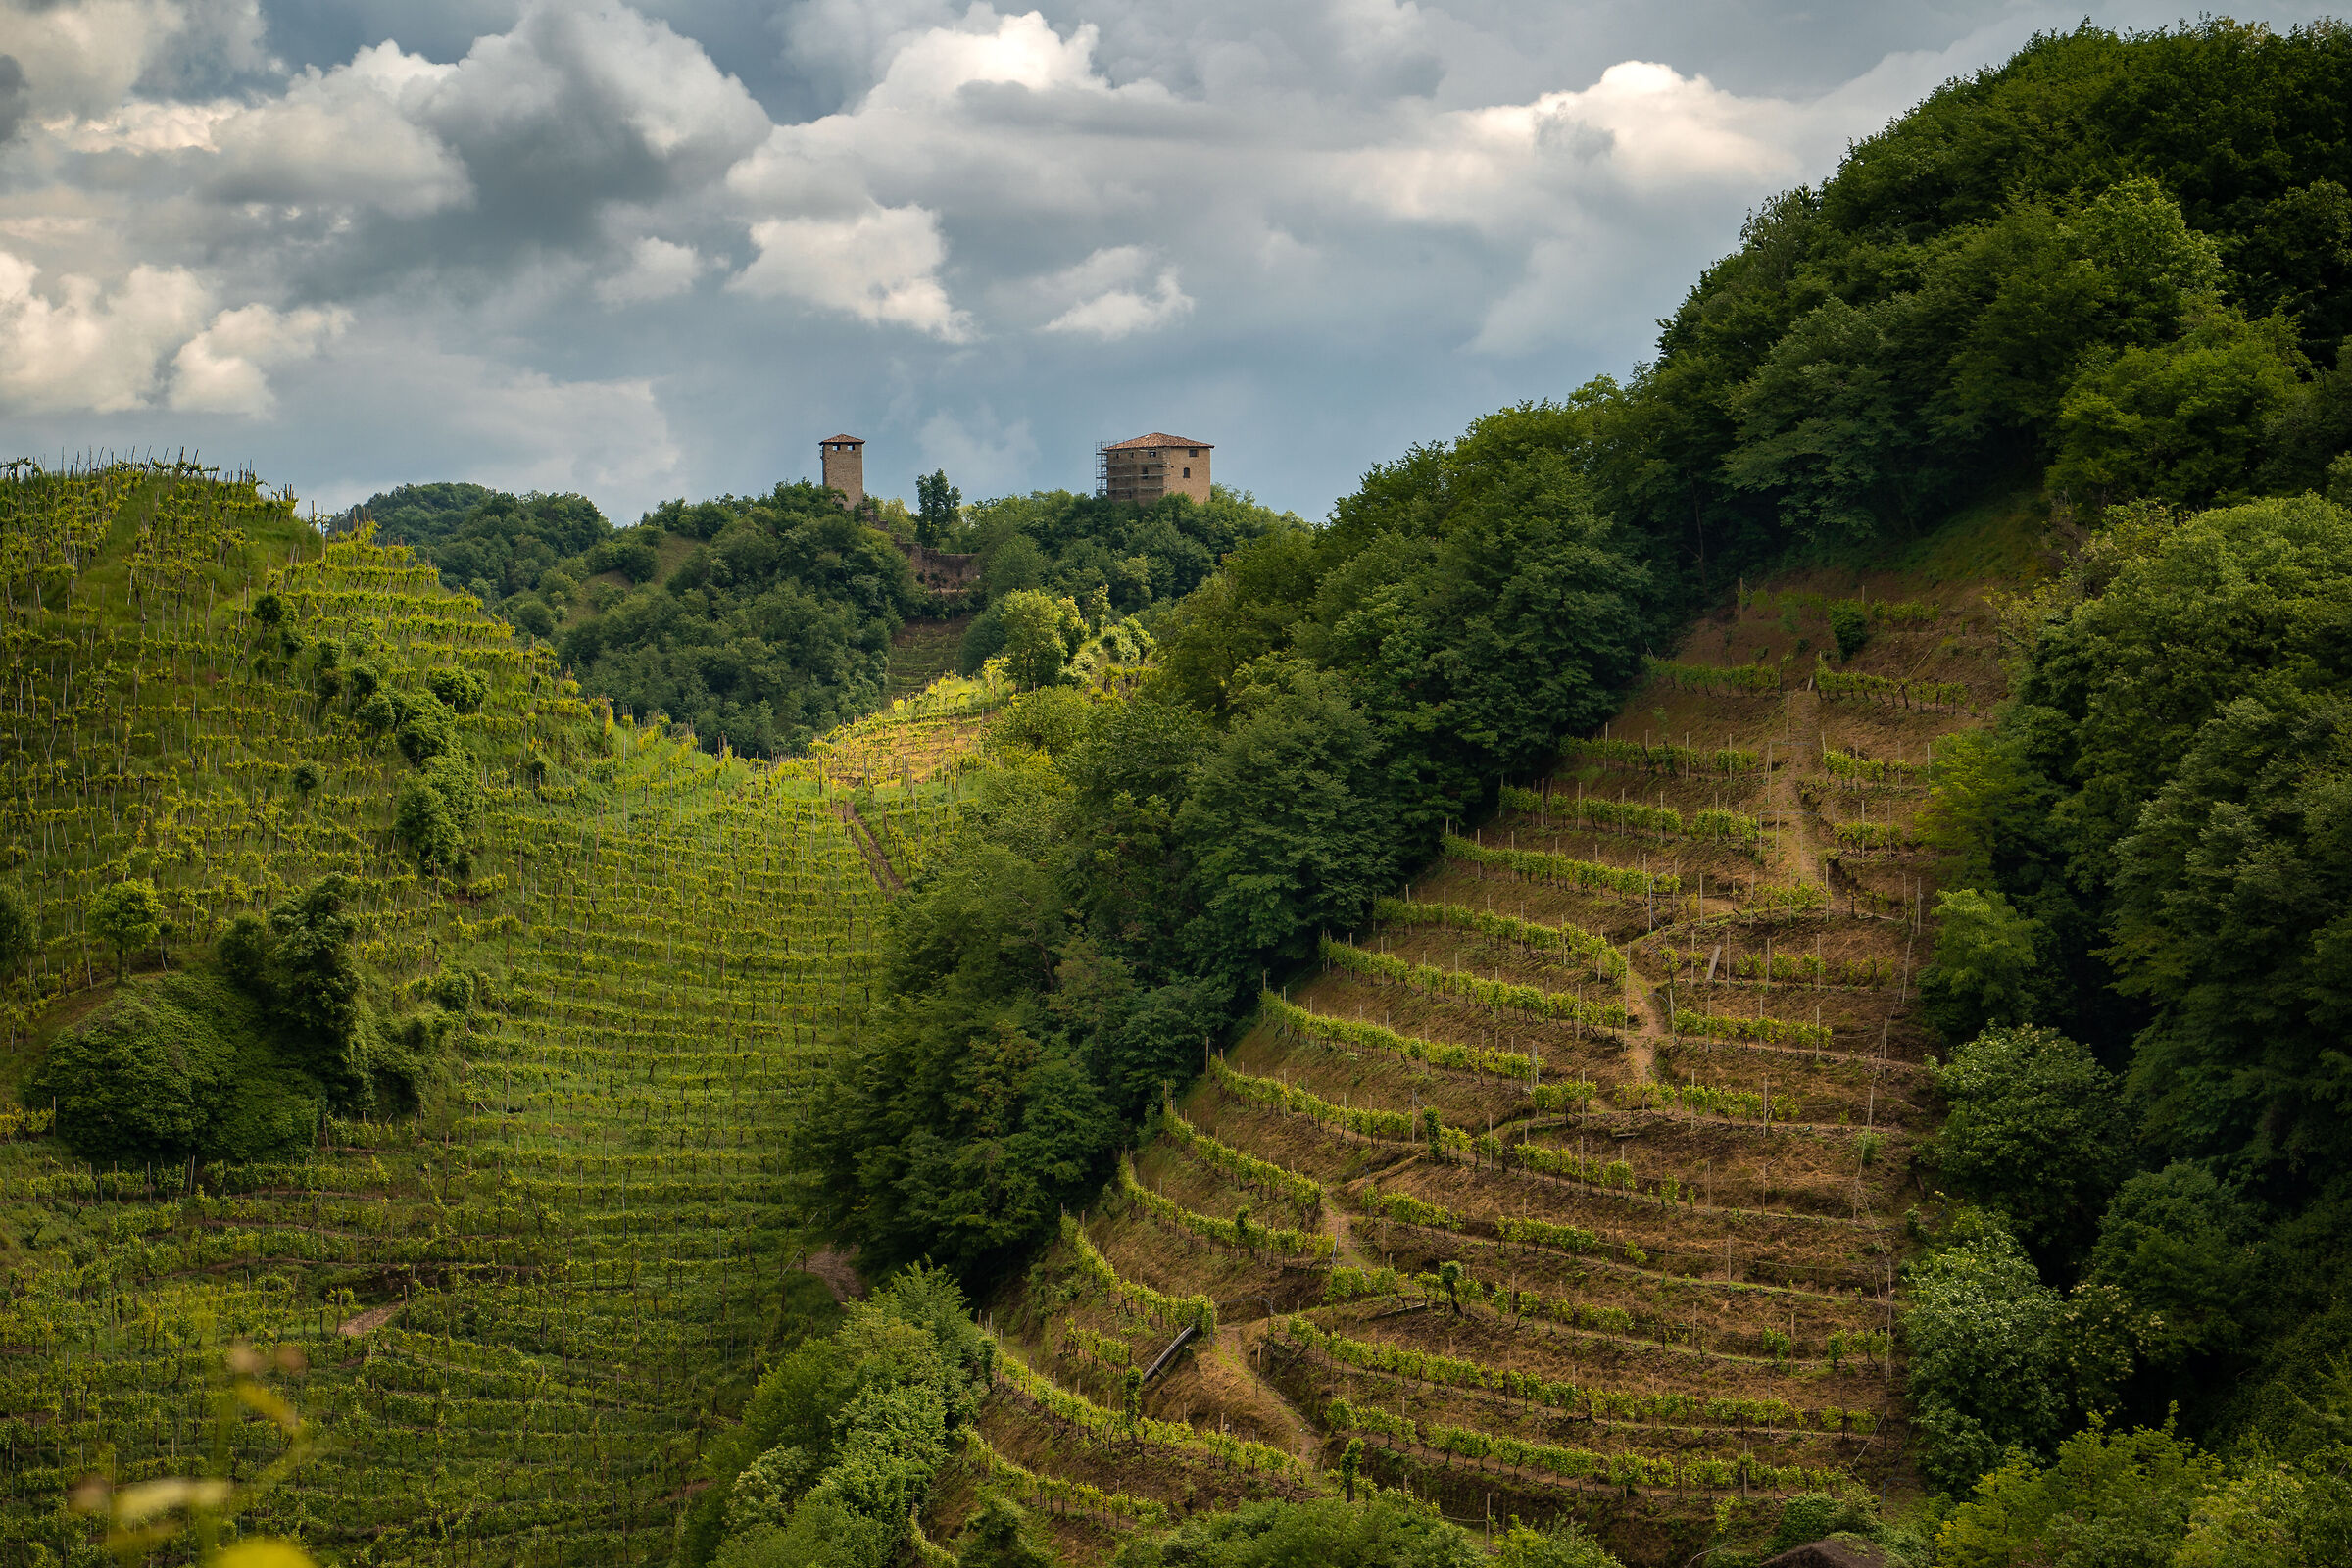 vineyards in the hills...